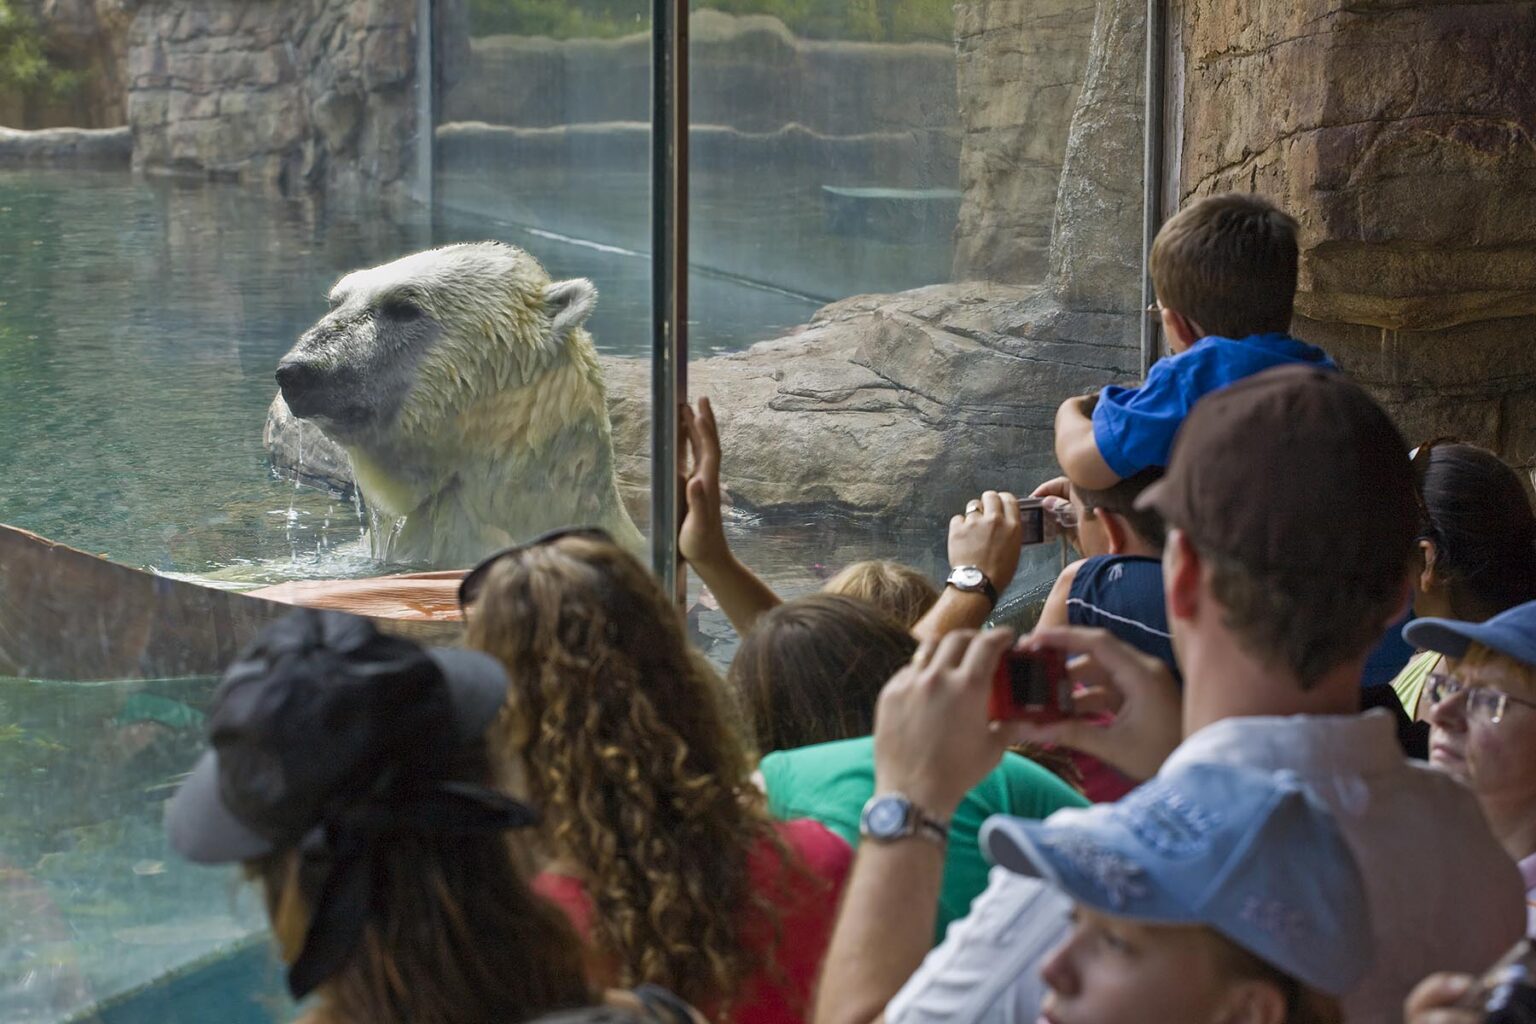 A POLAR BEAR (Ursus maritimus) in a pool is a real crowd pleaser at the SAN DIEGO ZOO - CALIFORNIA